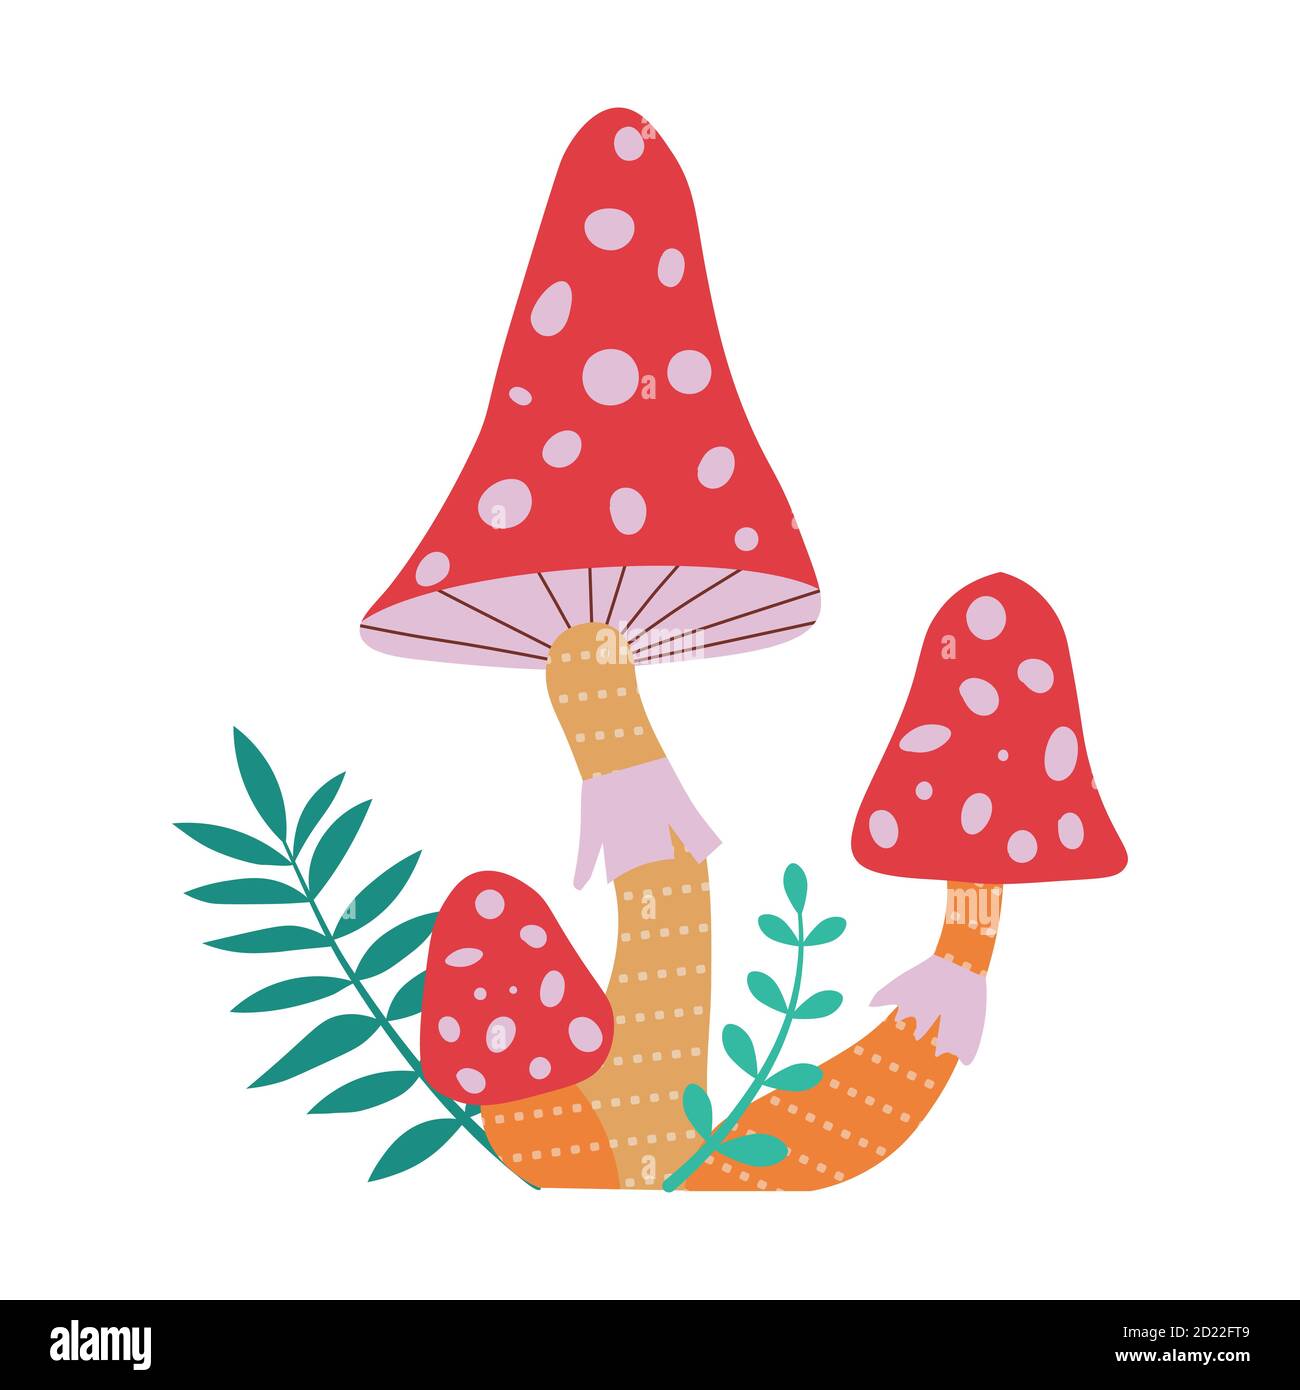 Forest Mushroom Fly Agaric in Cartoon Style Stock Vector